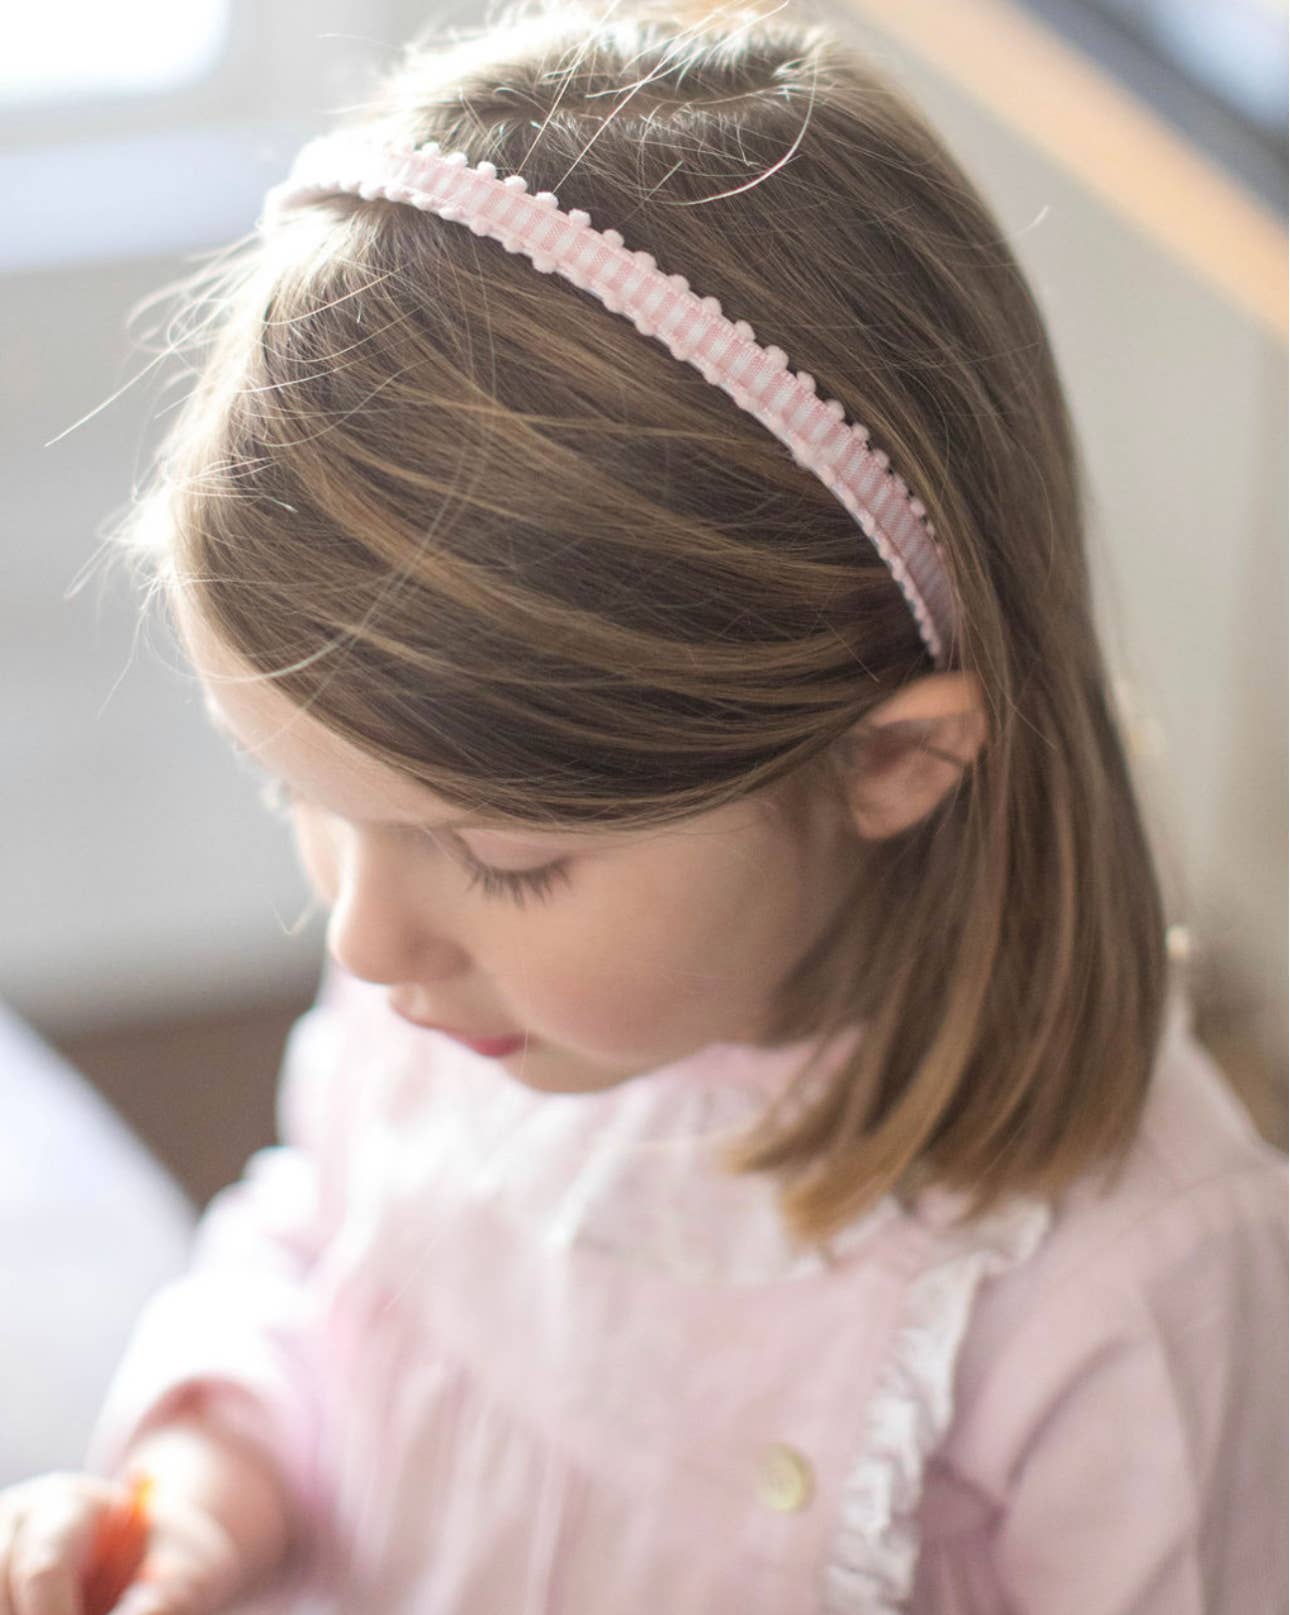 Lolo Headbands and Accessories - Pink Picot Ribbon Headband